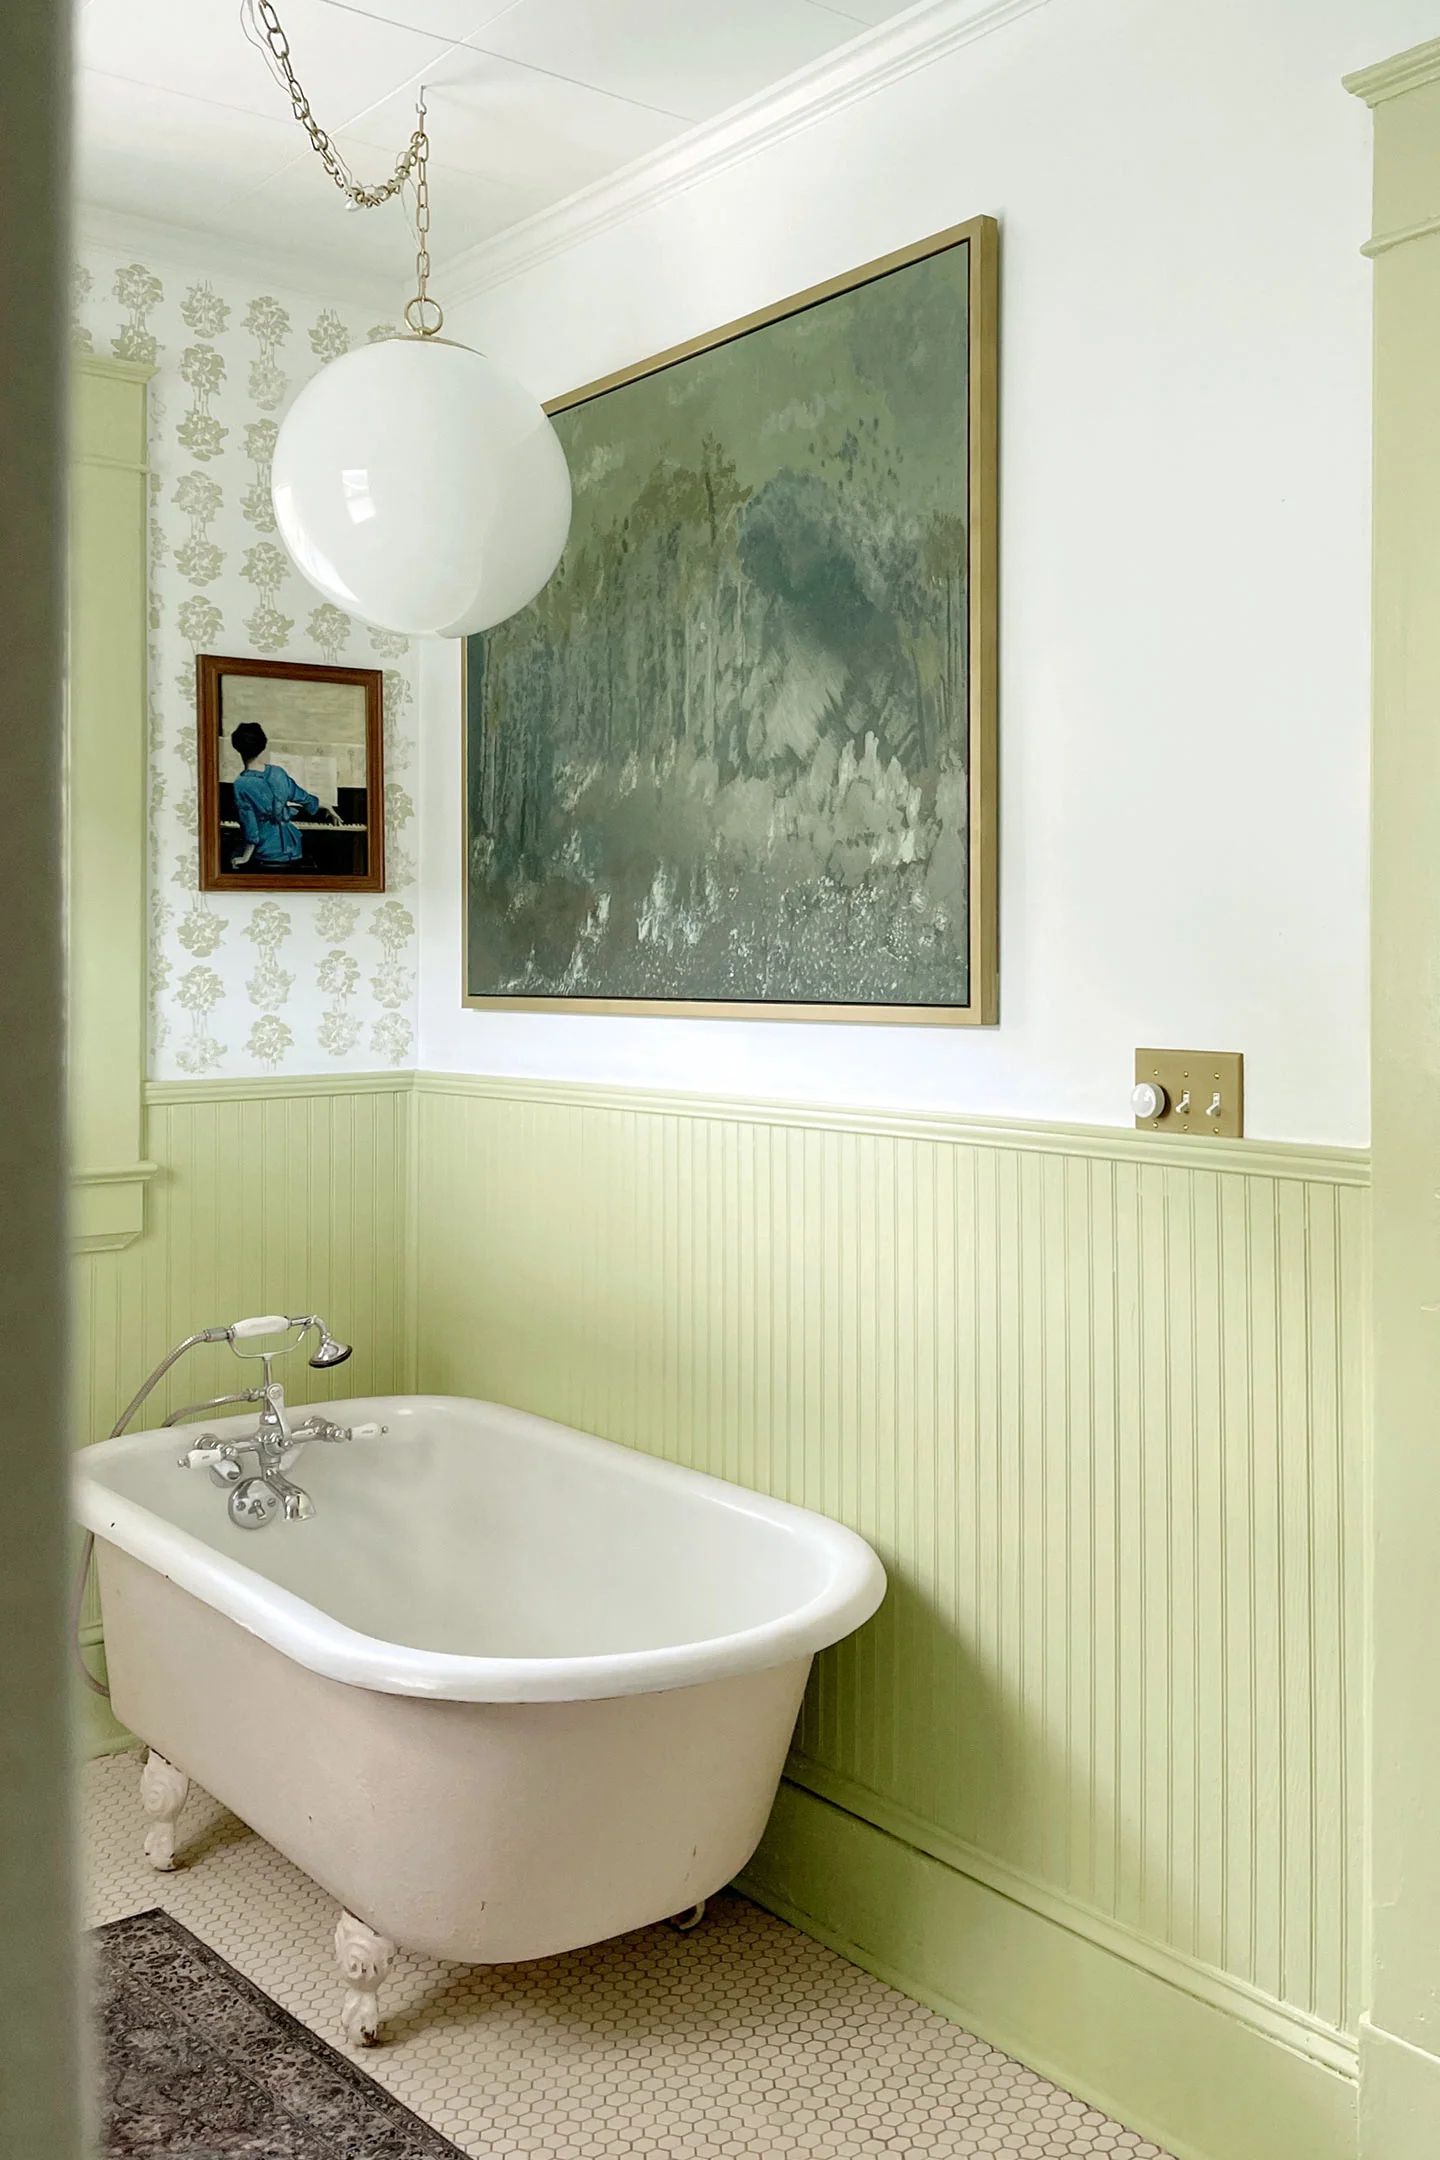 09-Walls-renovation-fresh-green-bathroom-wall-paneling